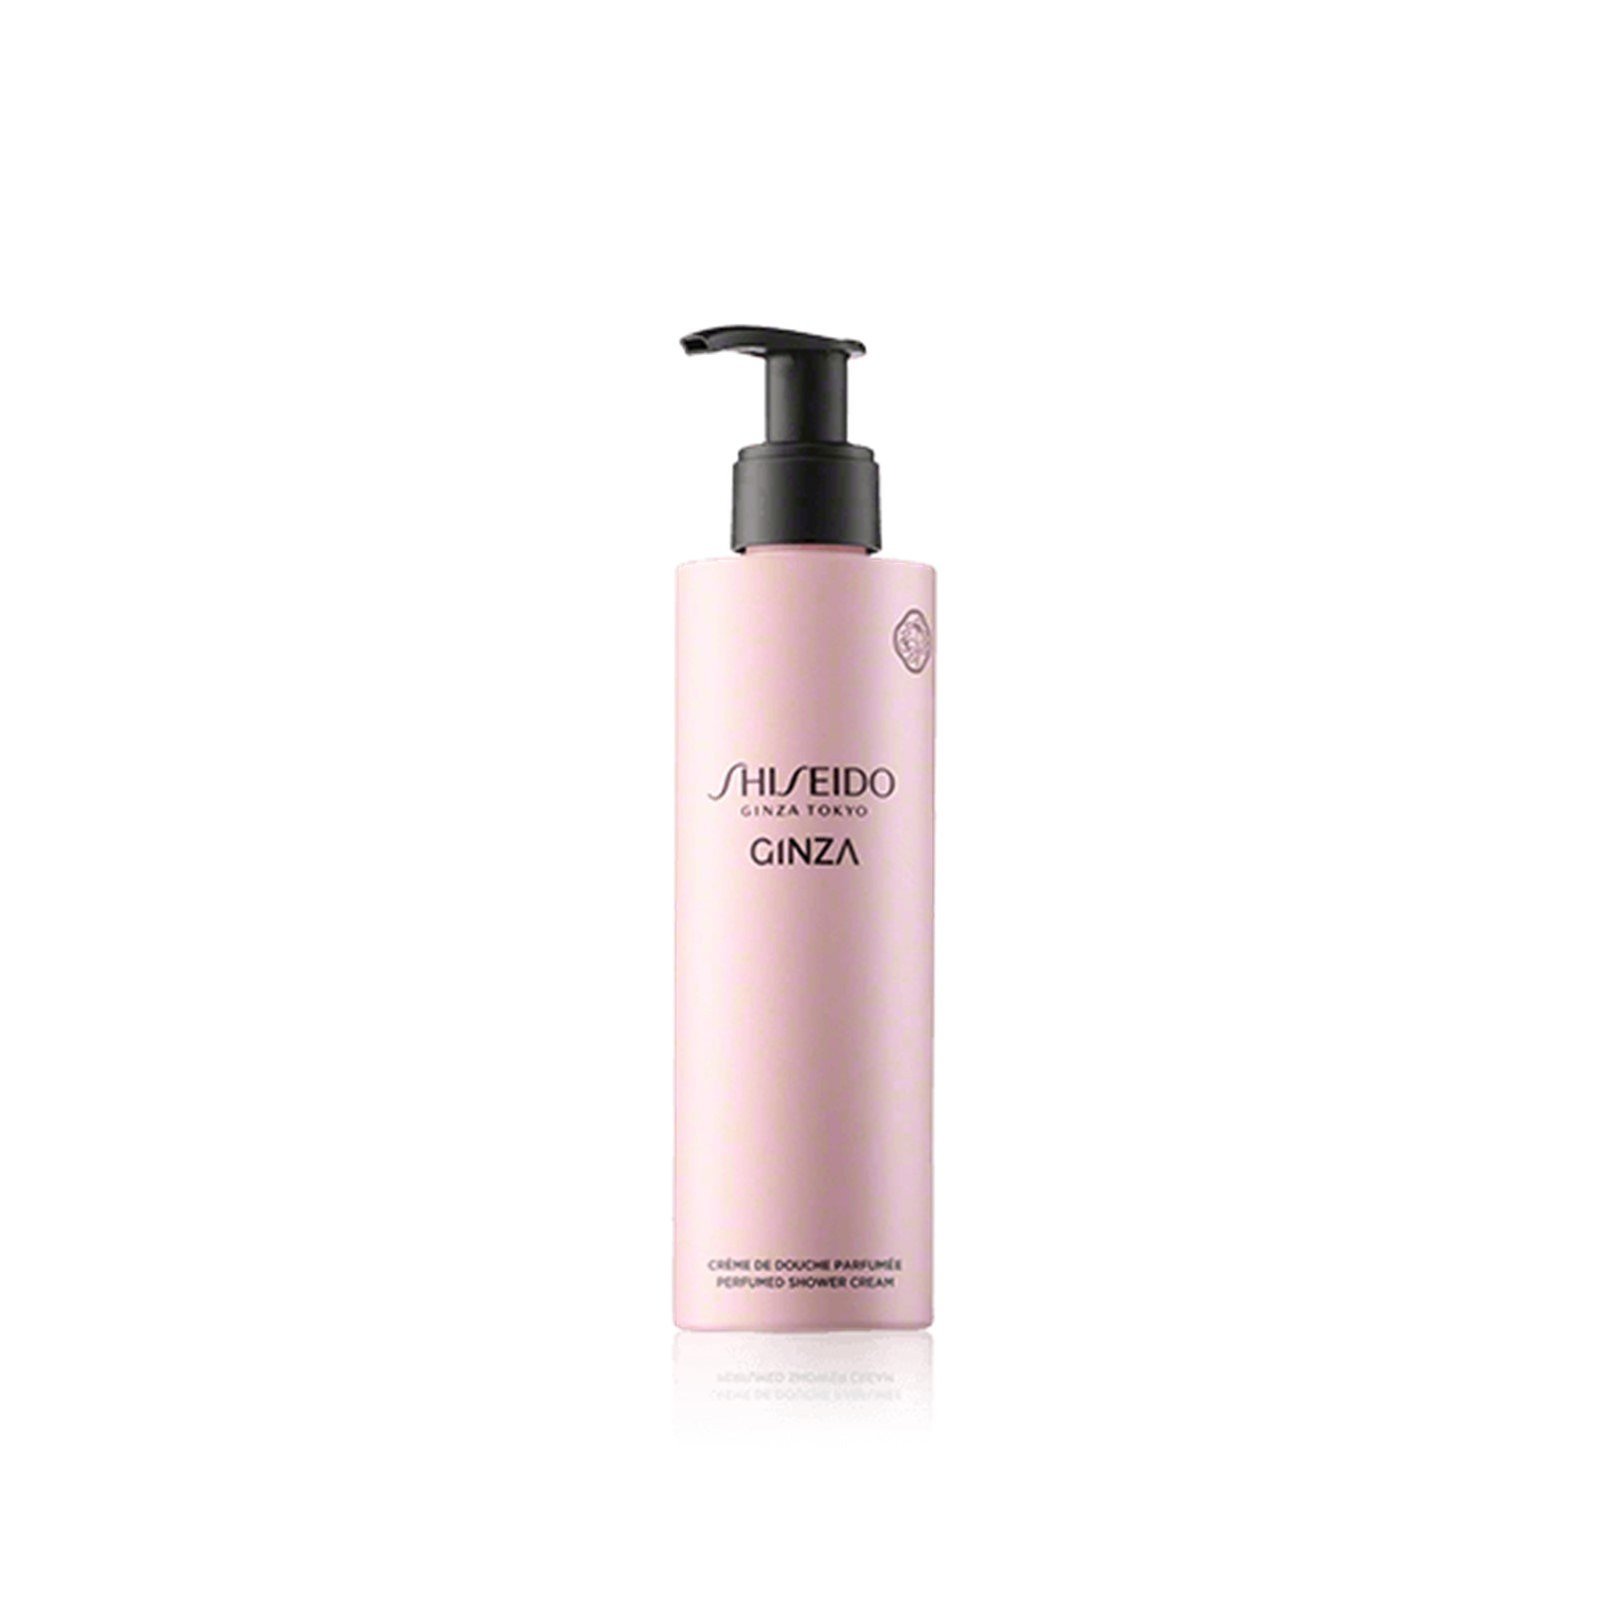 Shiseido Ginza Perfumed Shower Cream 200ml (6.7floz)